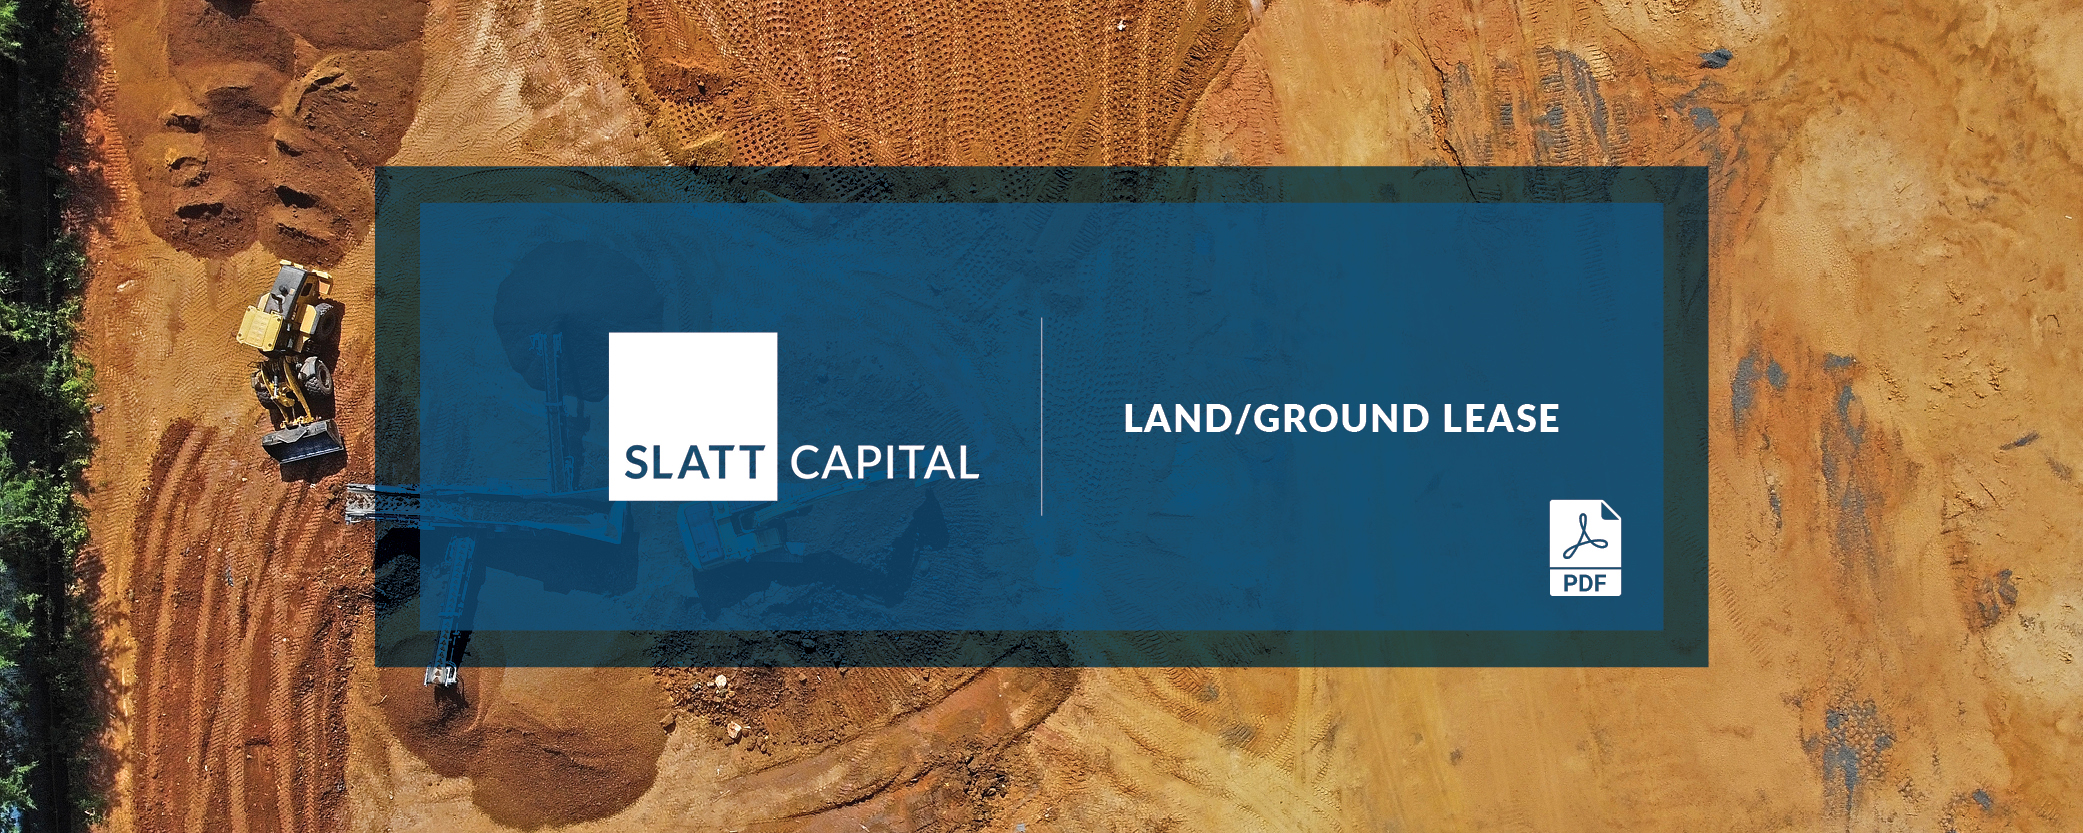 Land/ground lease